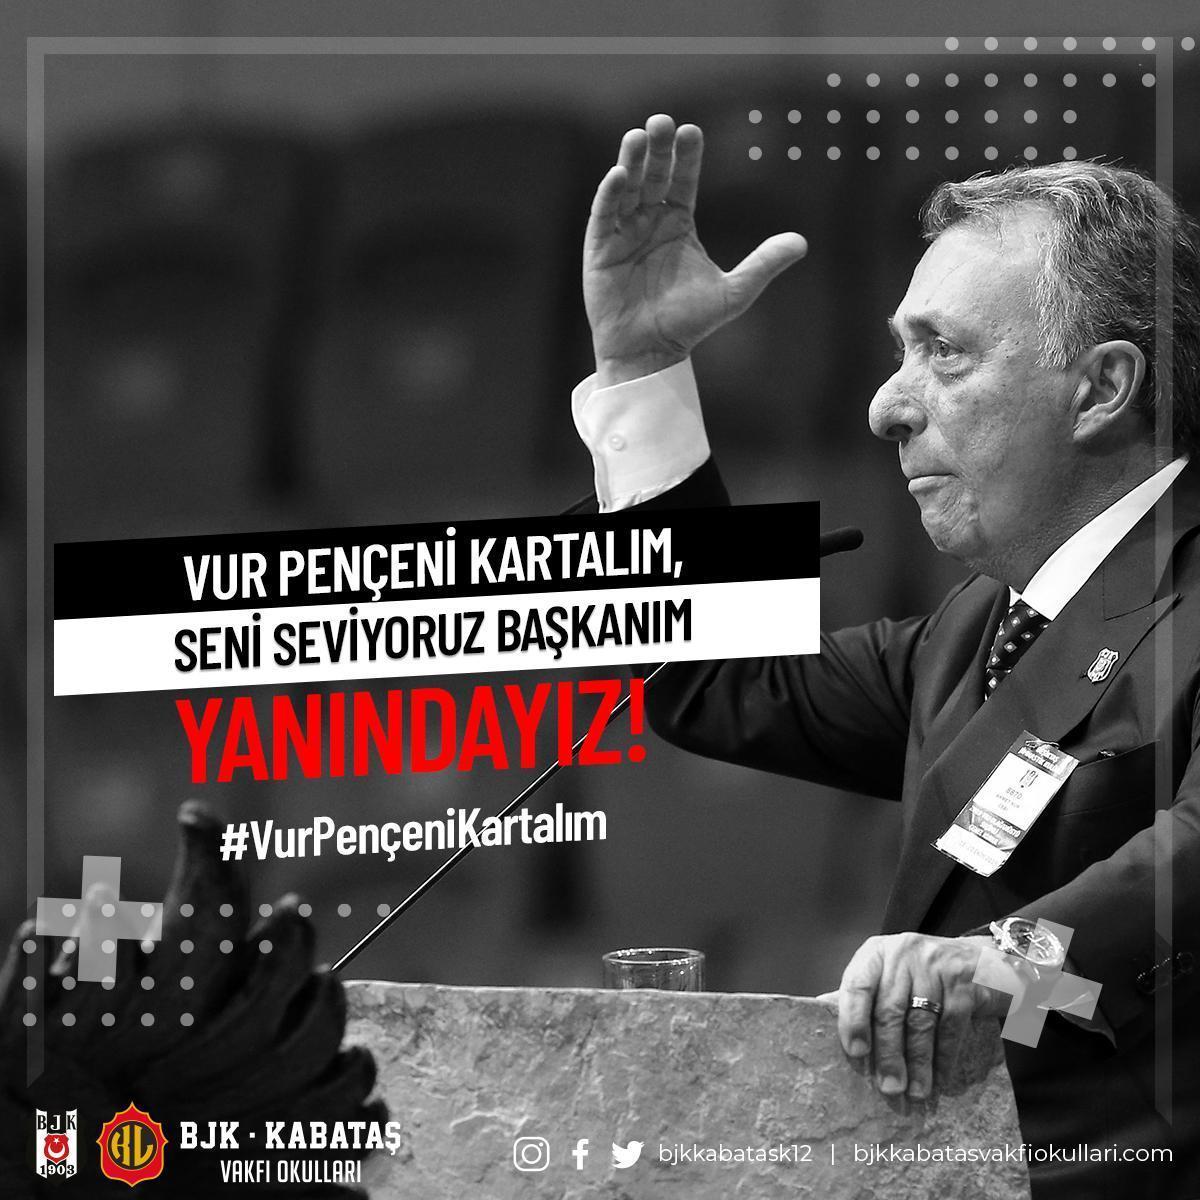 Beşiktaş Kabataş Vakfından Beşiktaşa geçmiş olsun mesajı